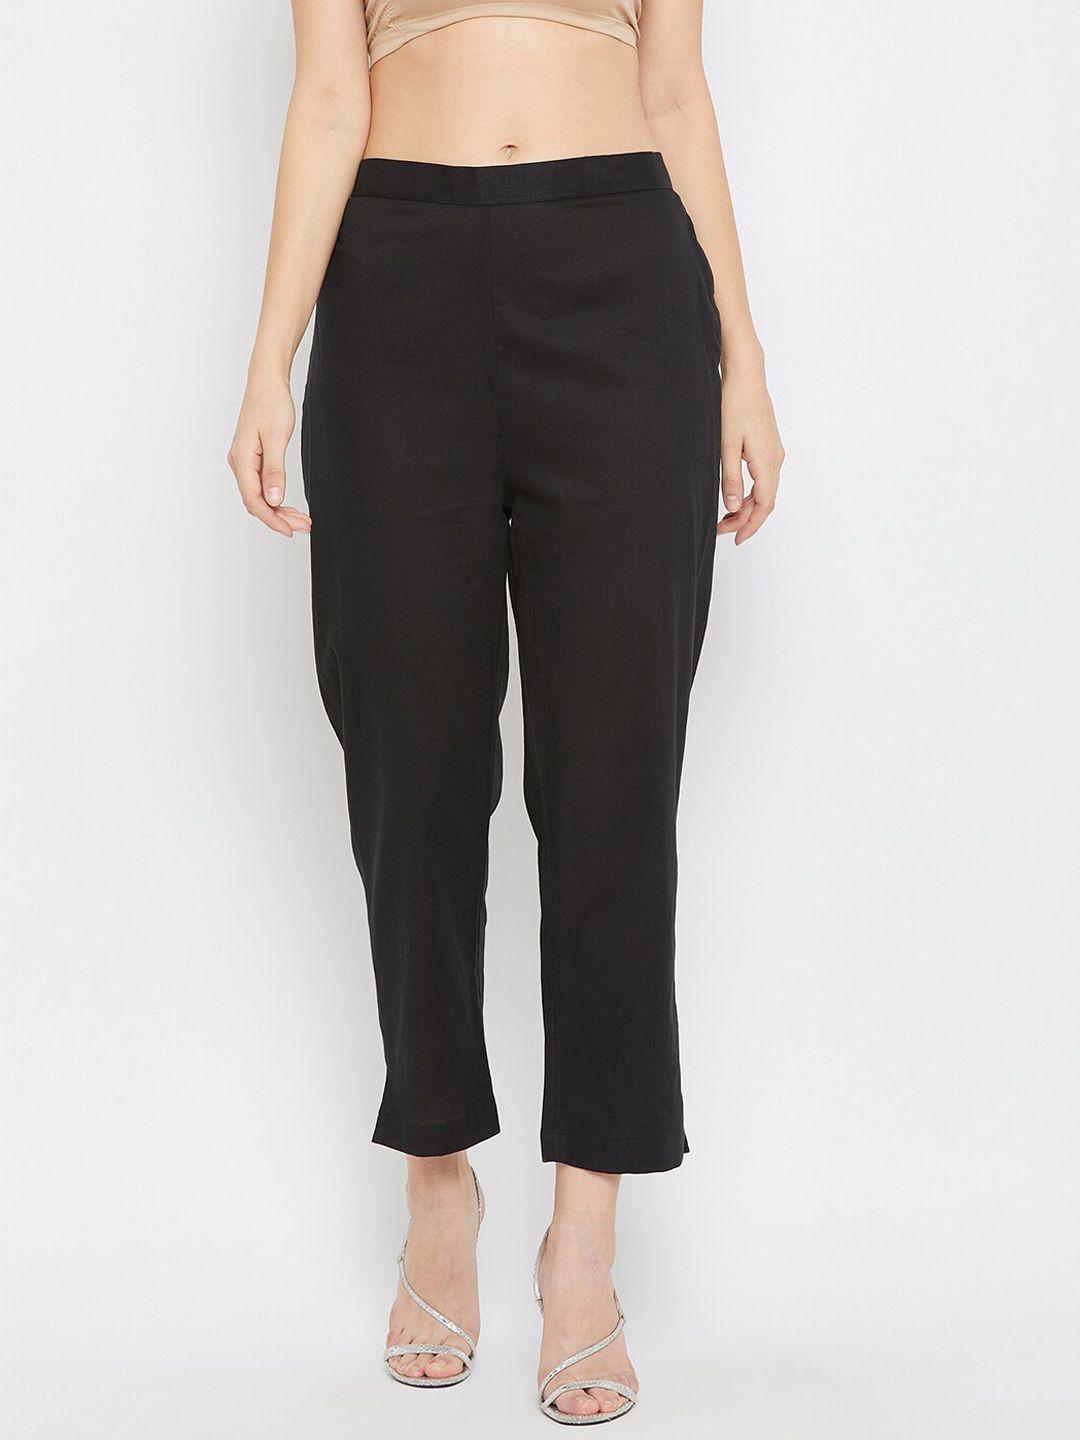 Clora Black Regular Fit Solid Pants Price in India